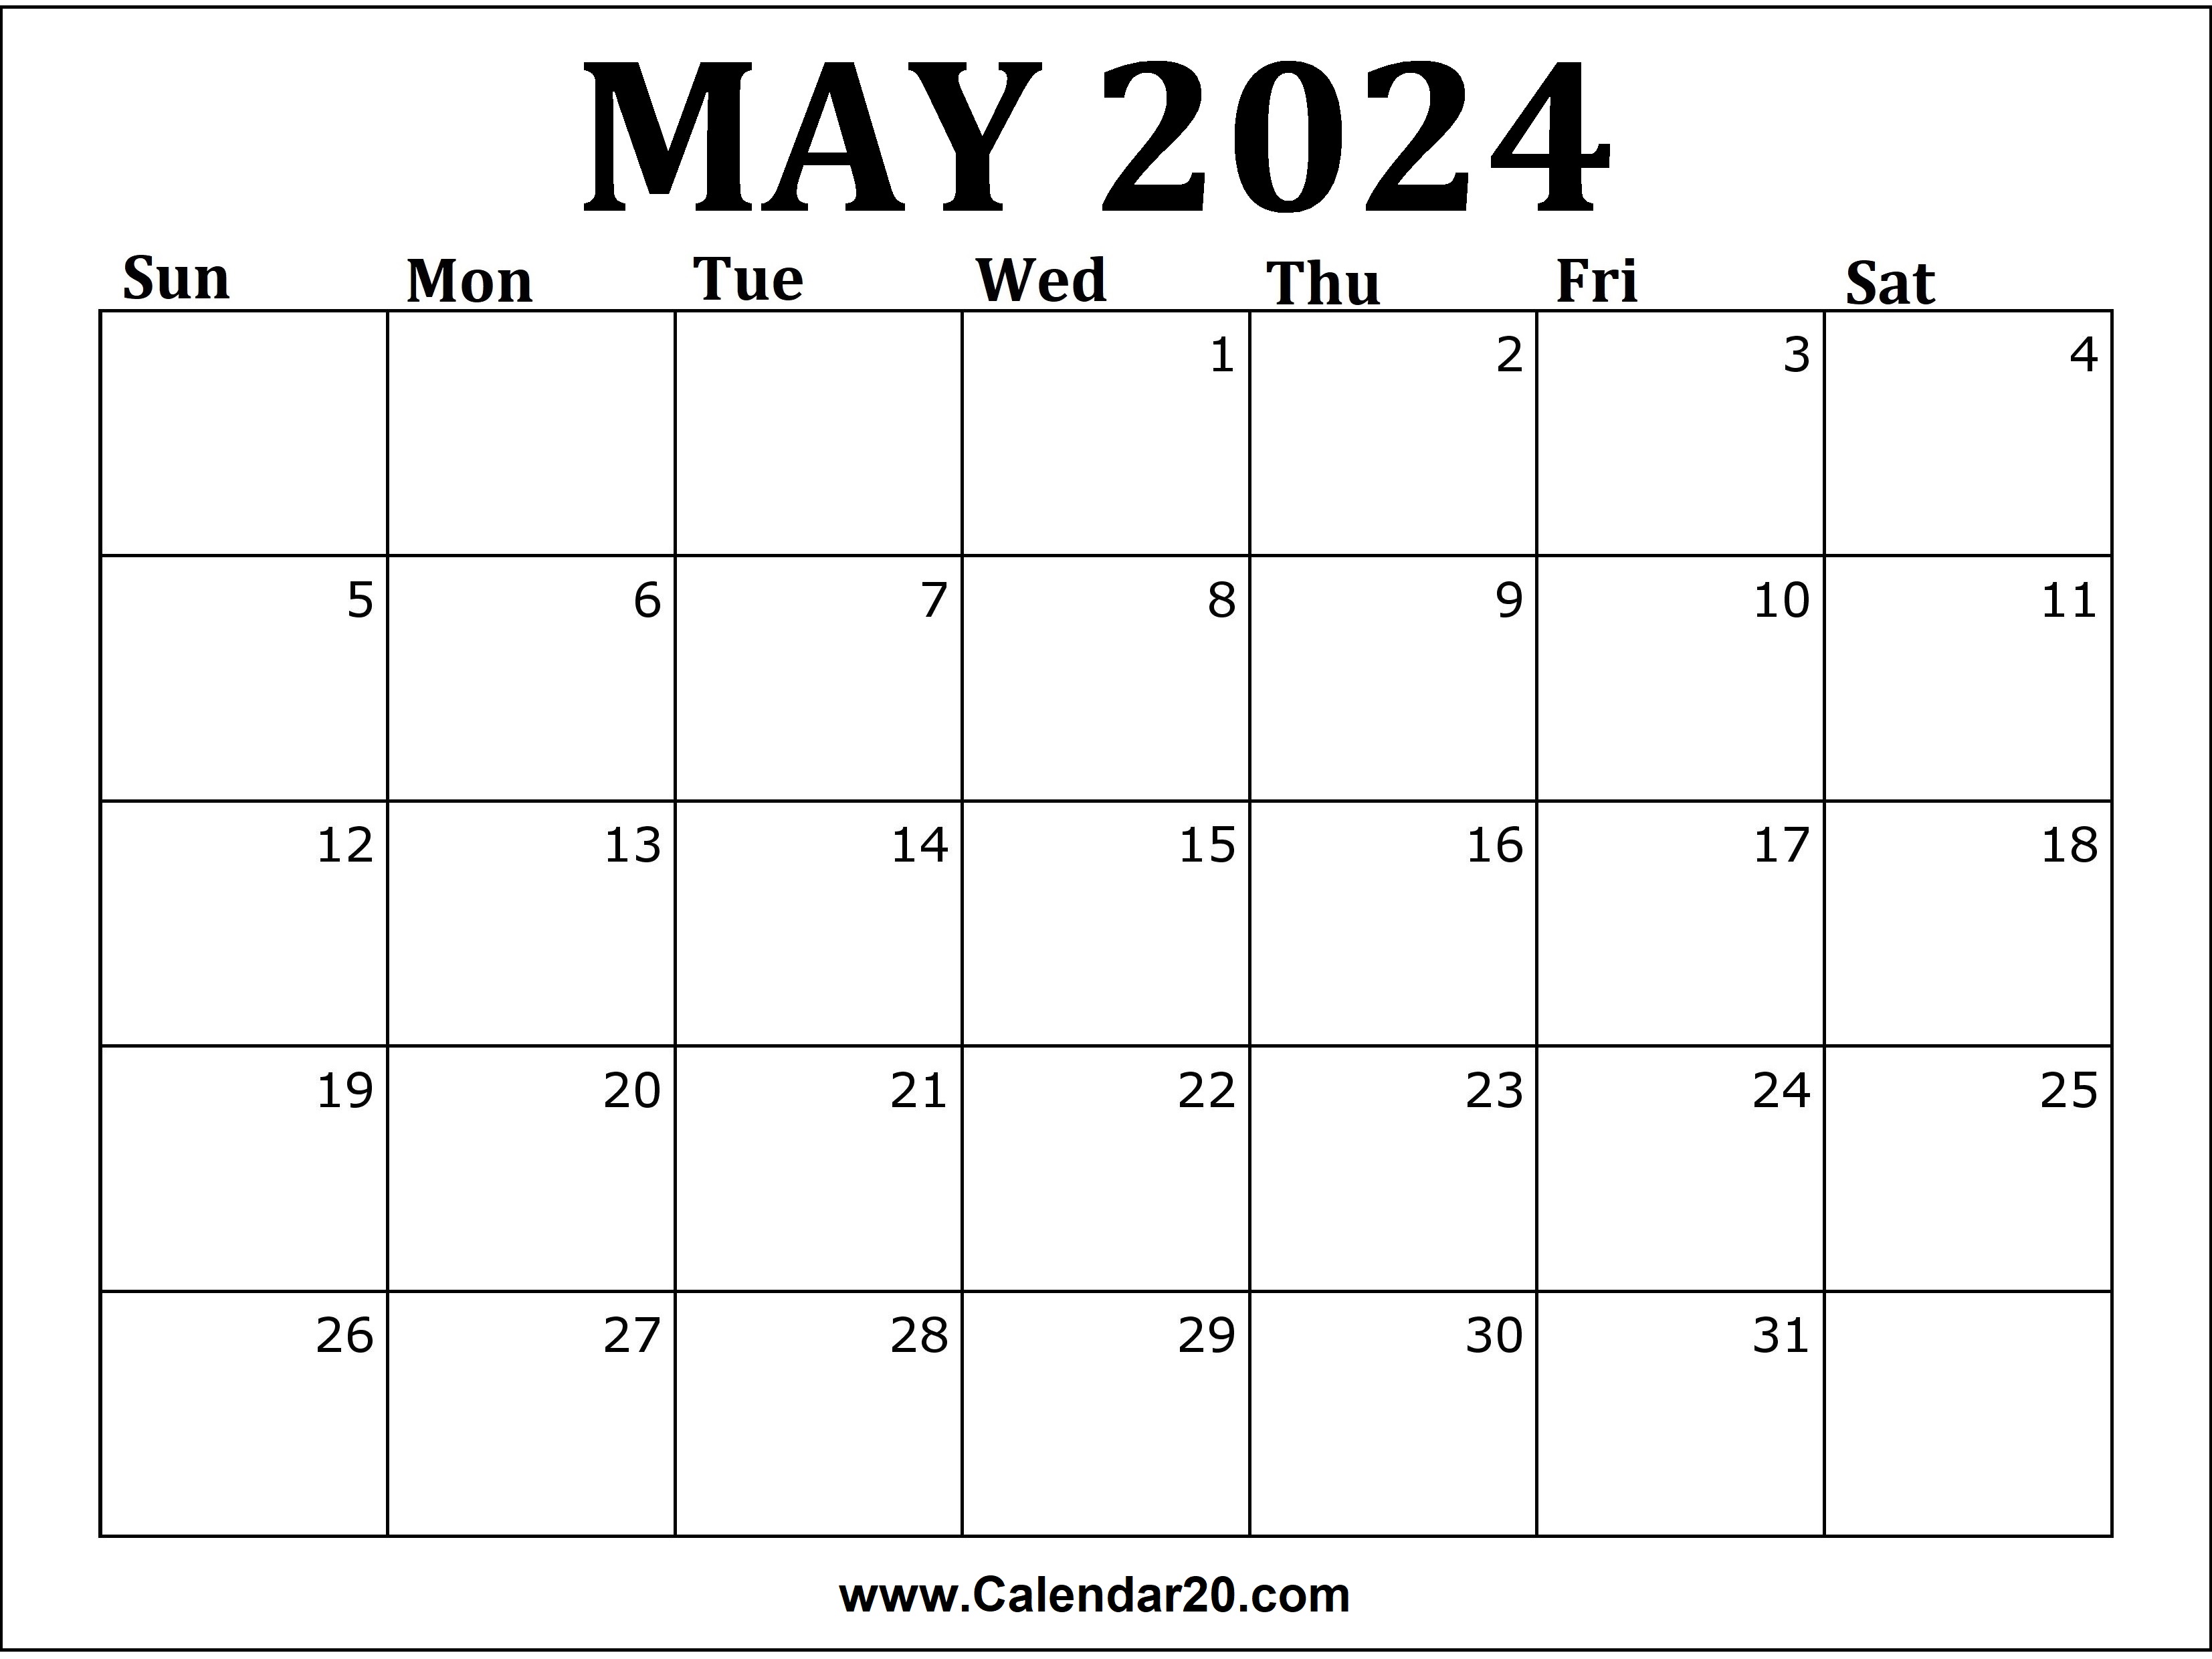 may-2024-printable-calendar-calendar20